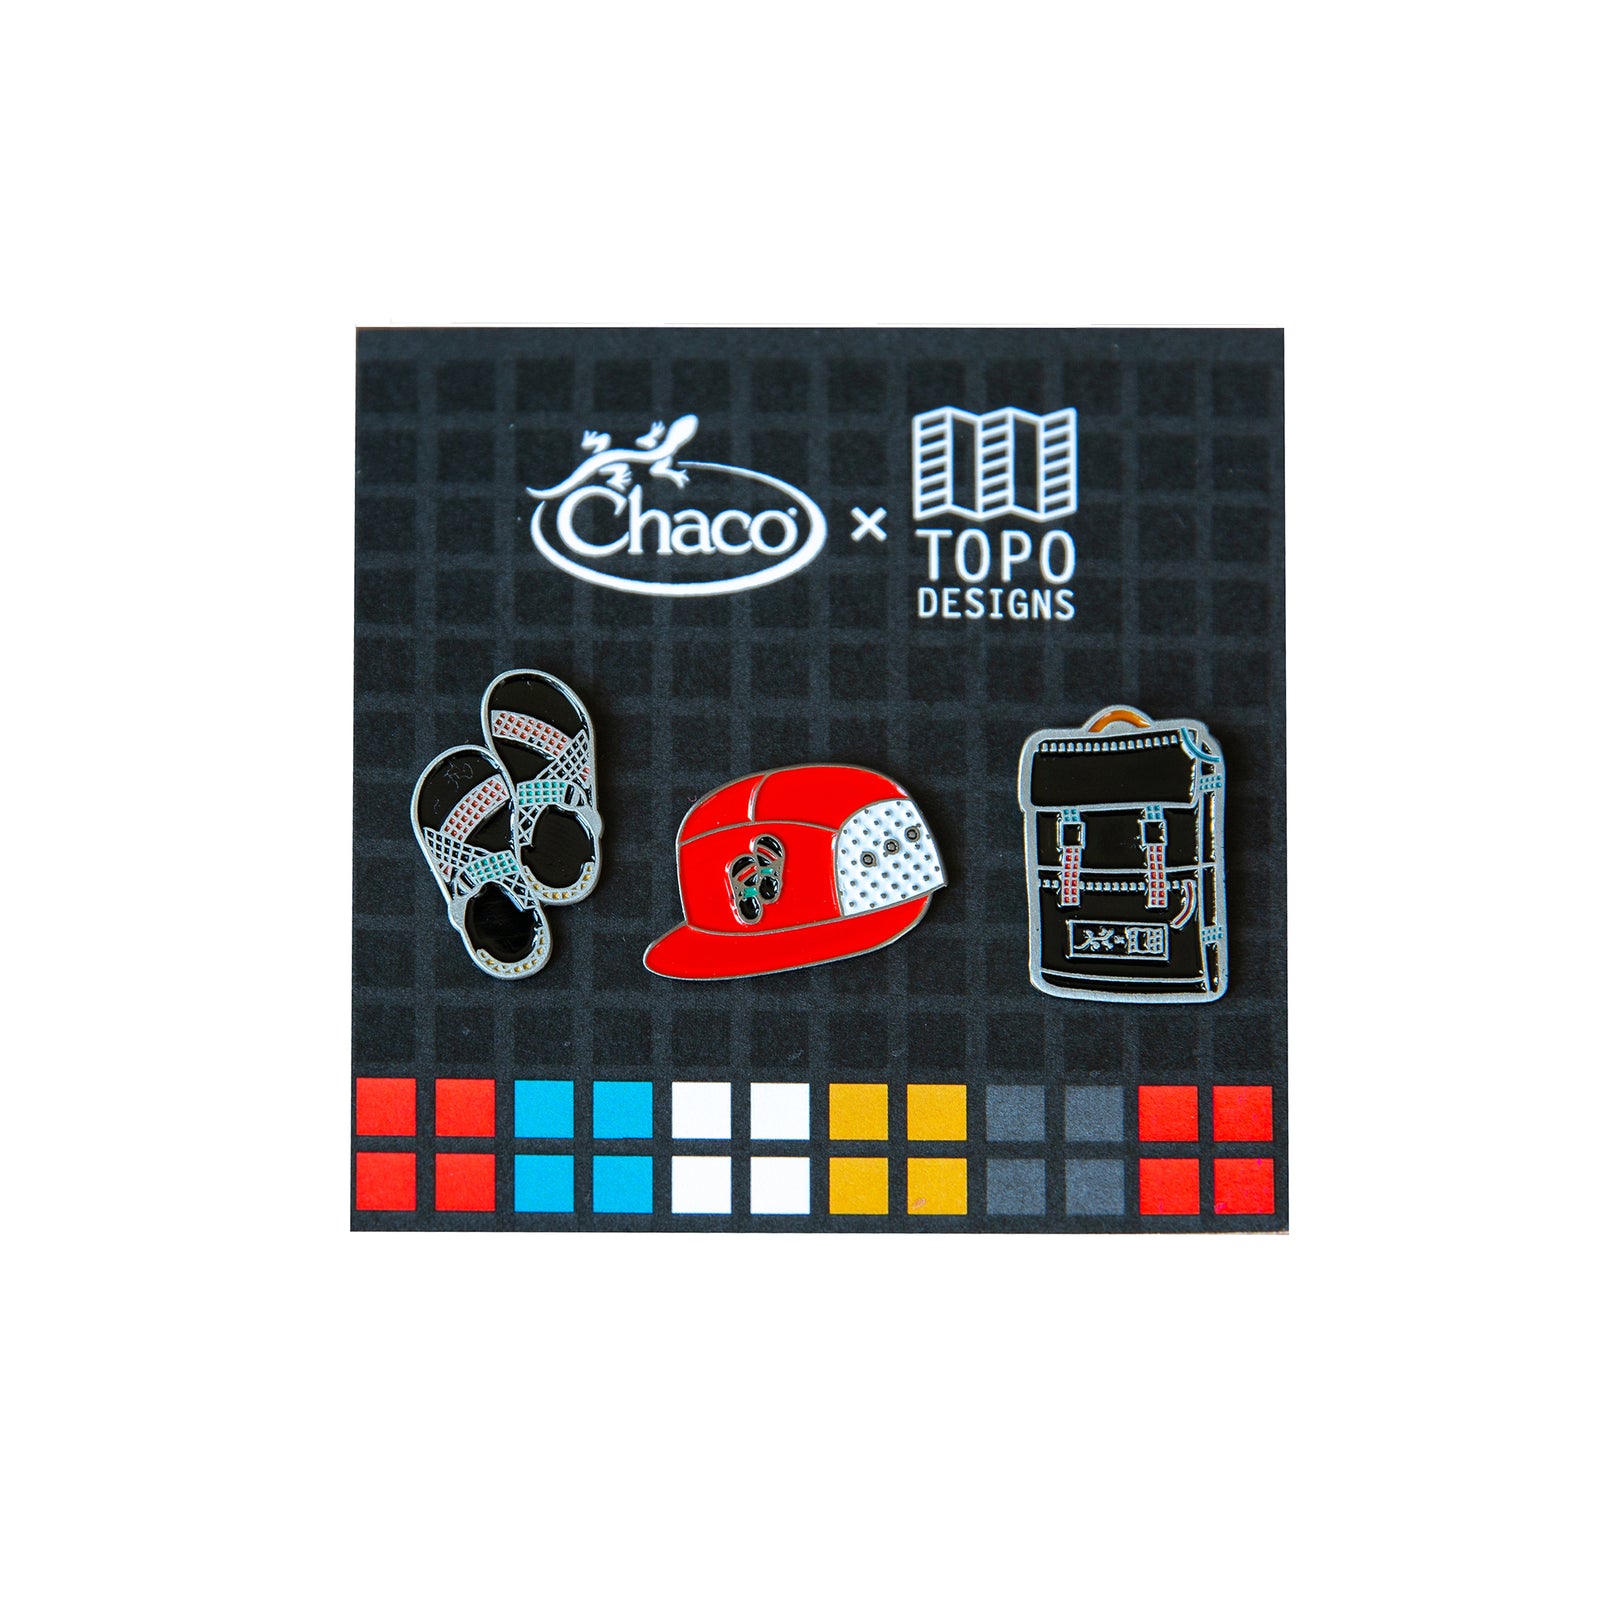 Topo Designs x Chaco Pin Set